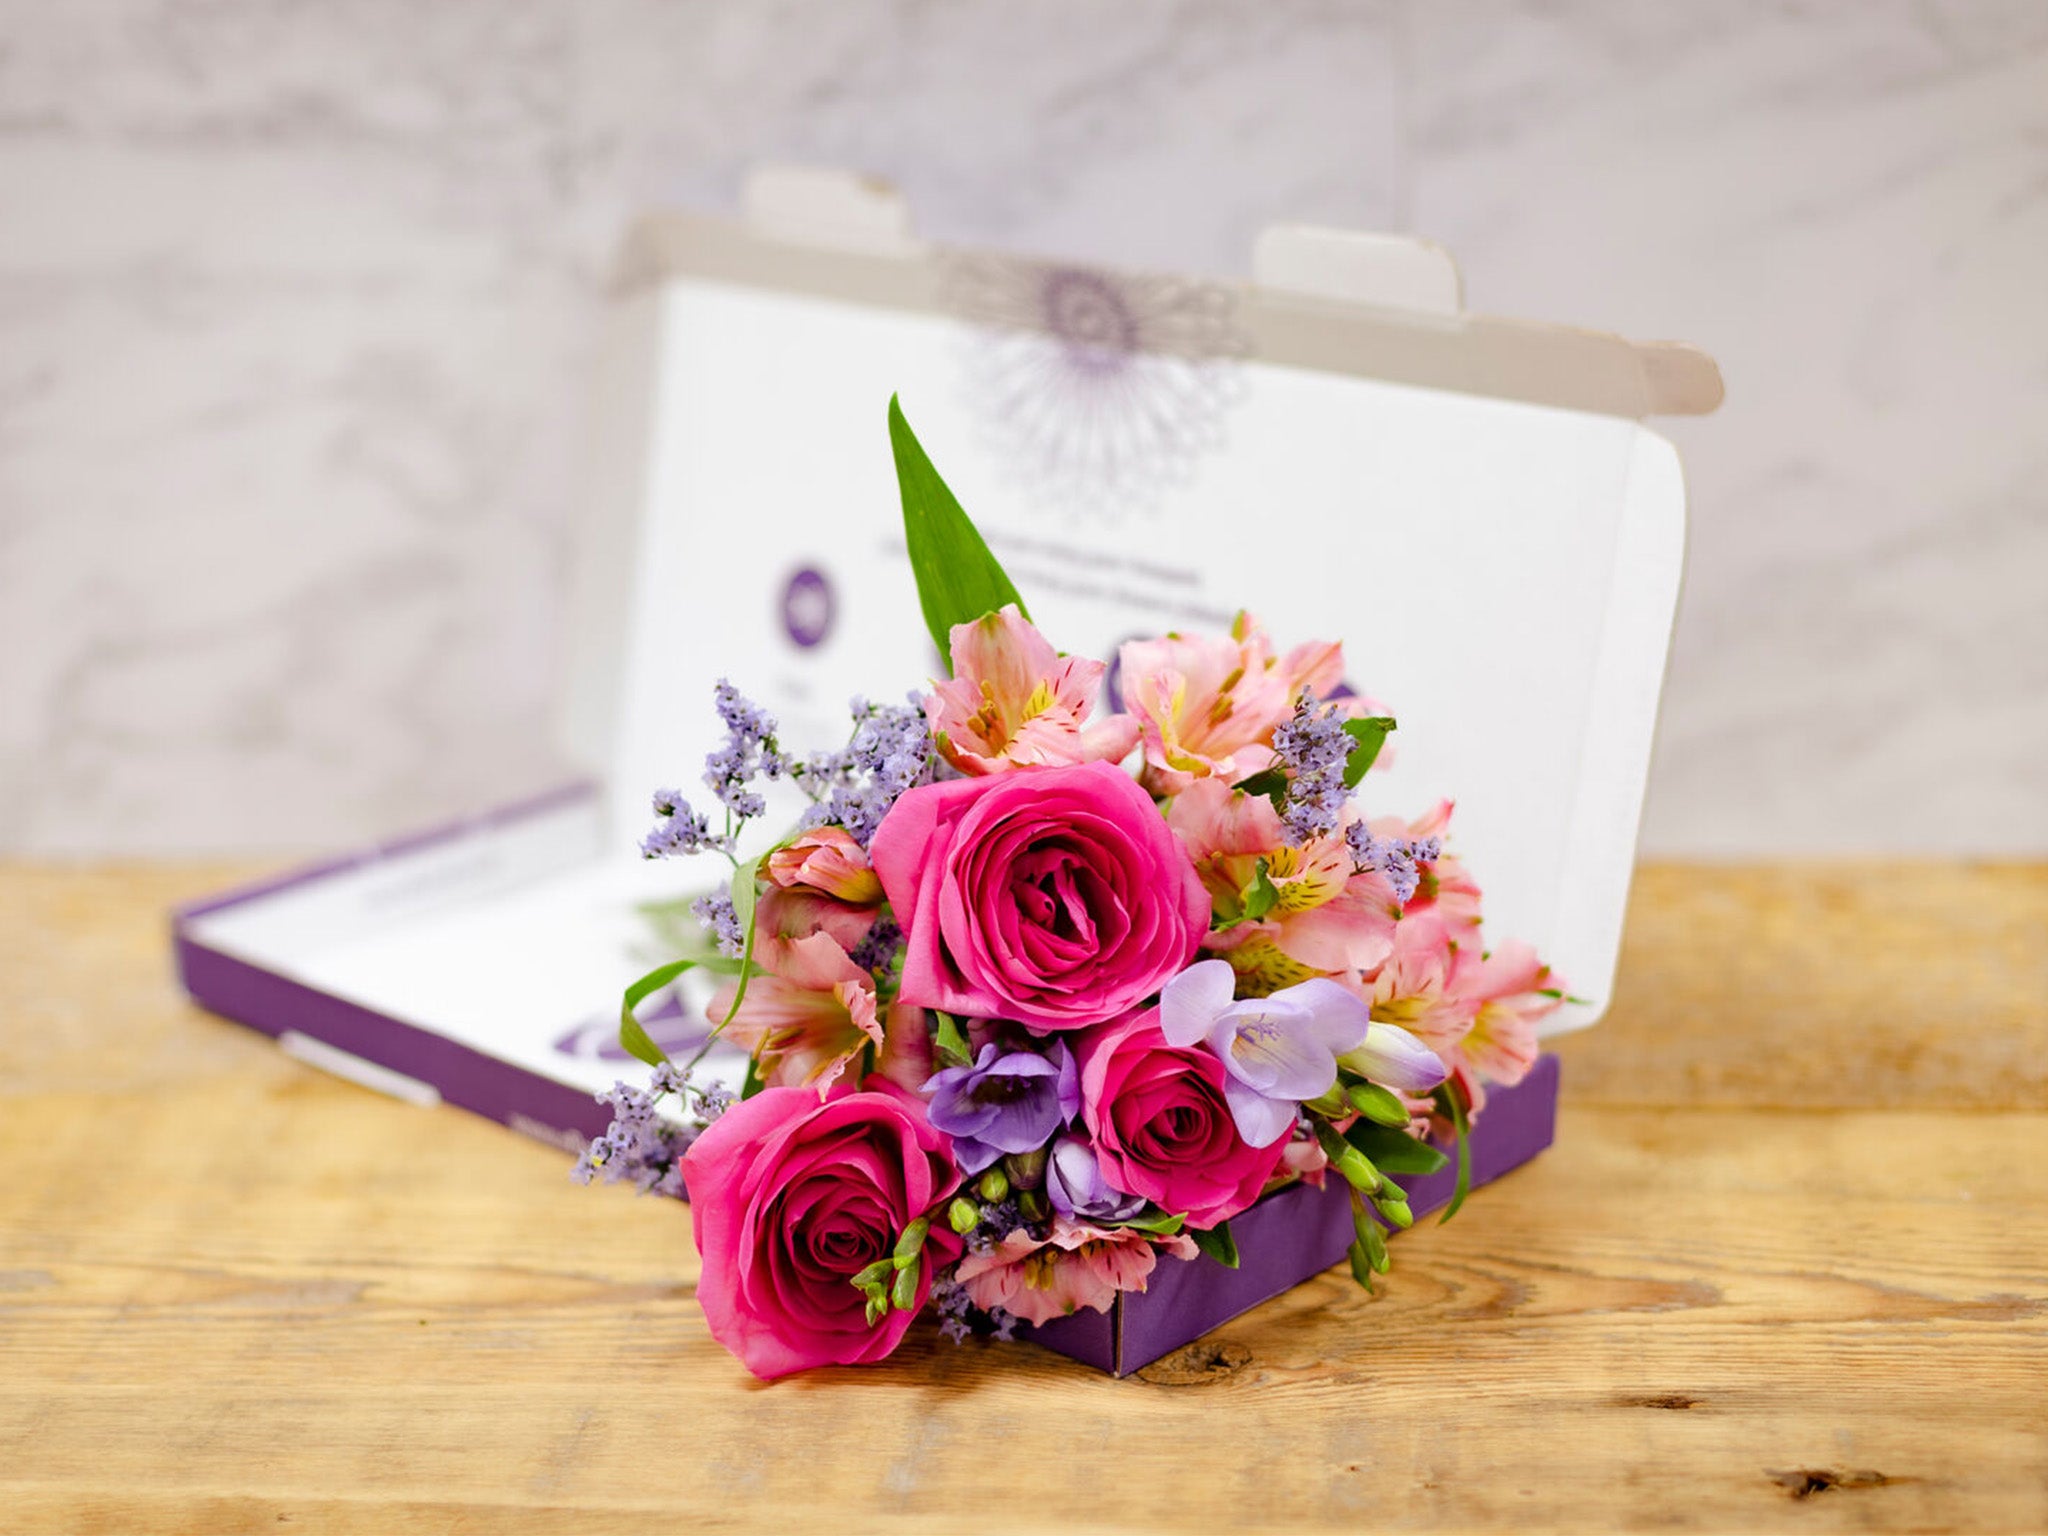 Eflorist letterbox flowers roses & alstro